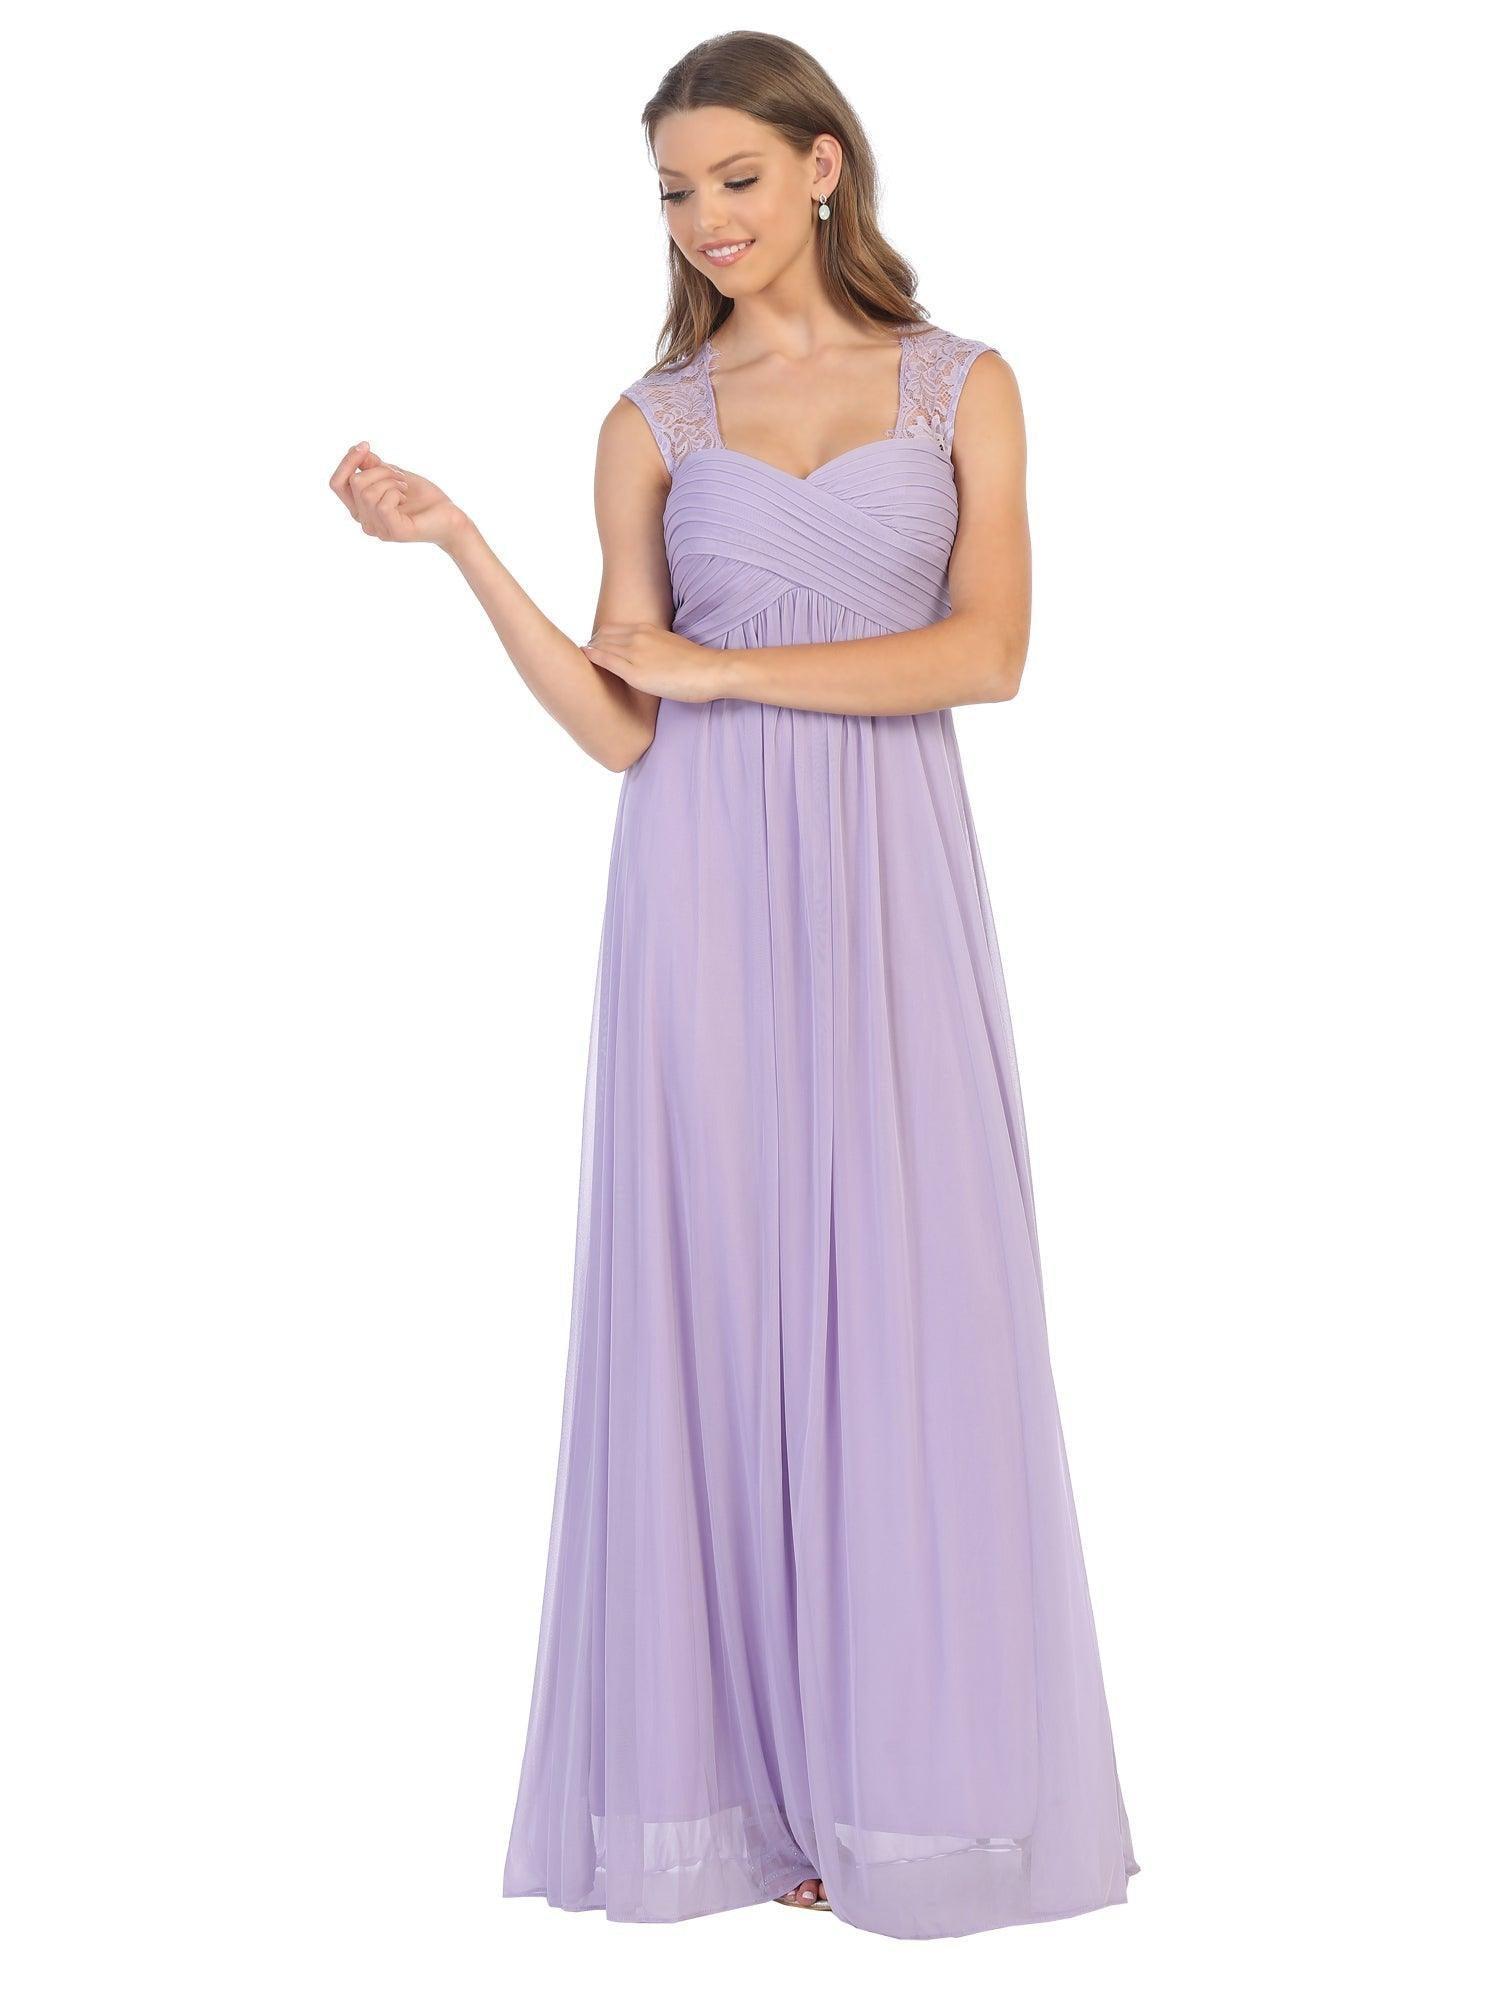 Long Formal Sleeveless Chiffon Bridesmaids Dress - The Dress Outlet